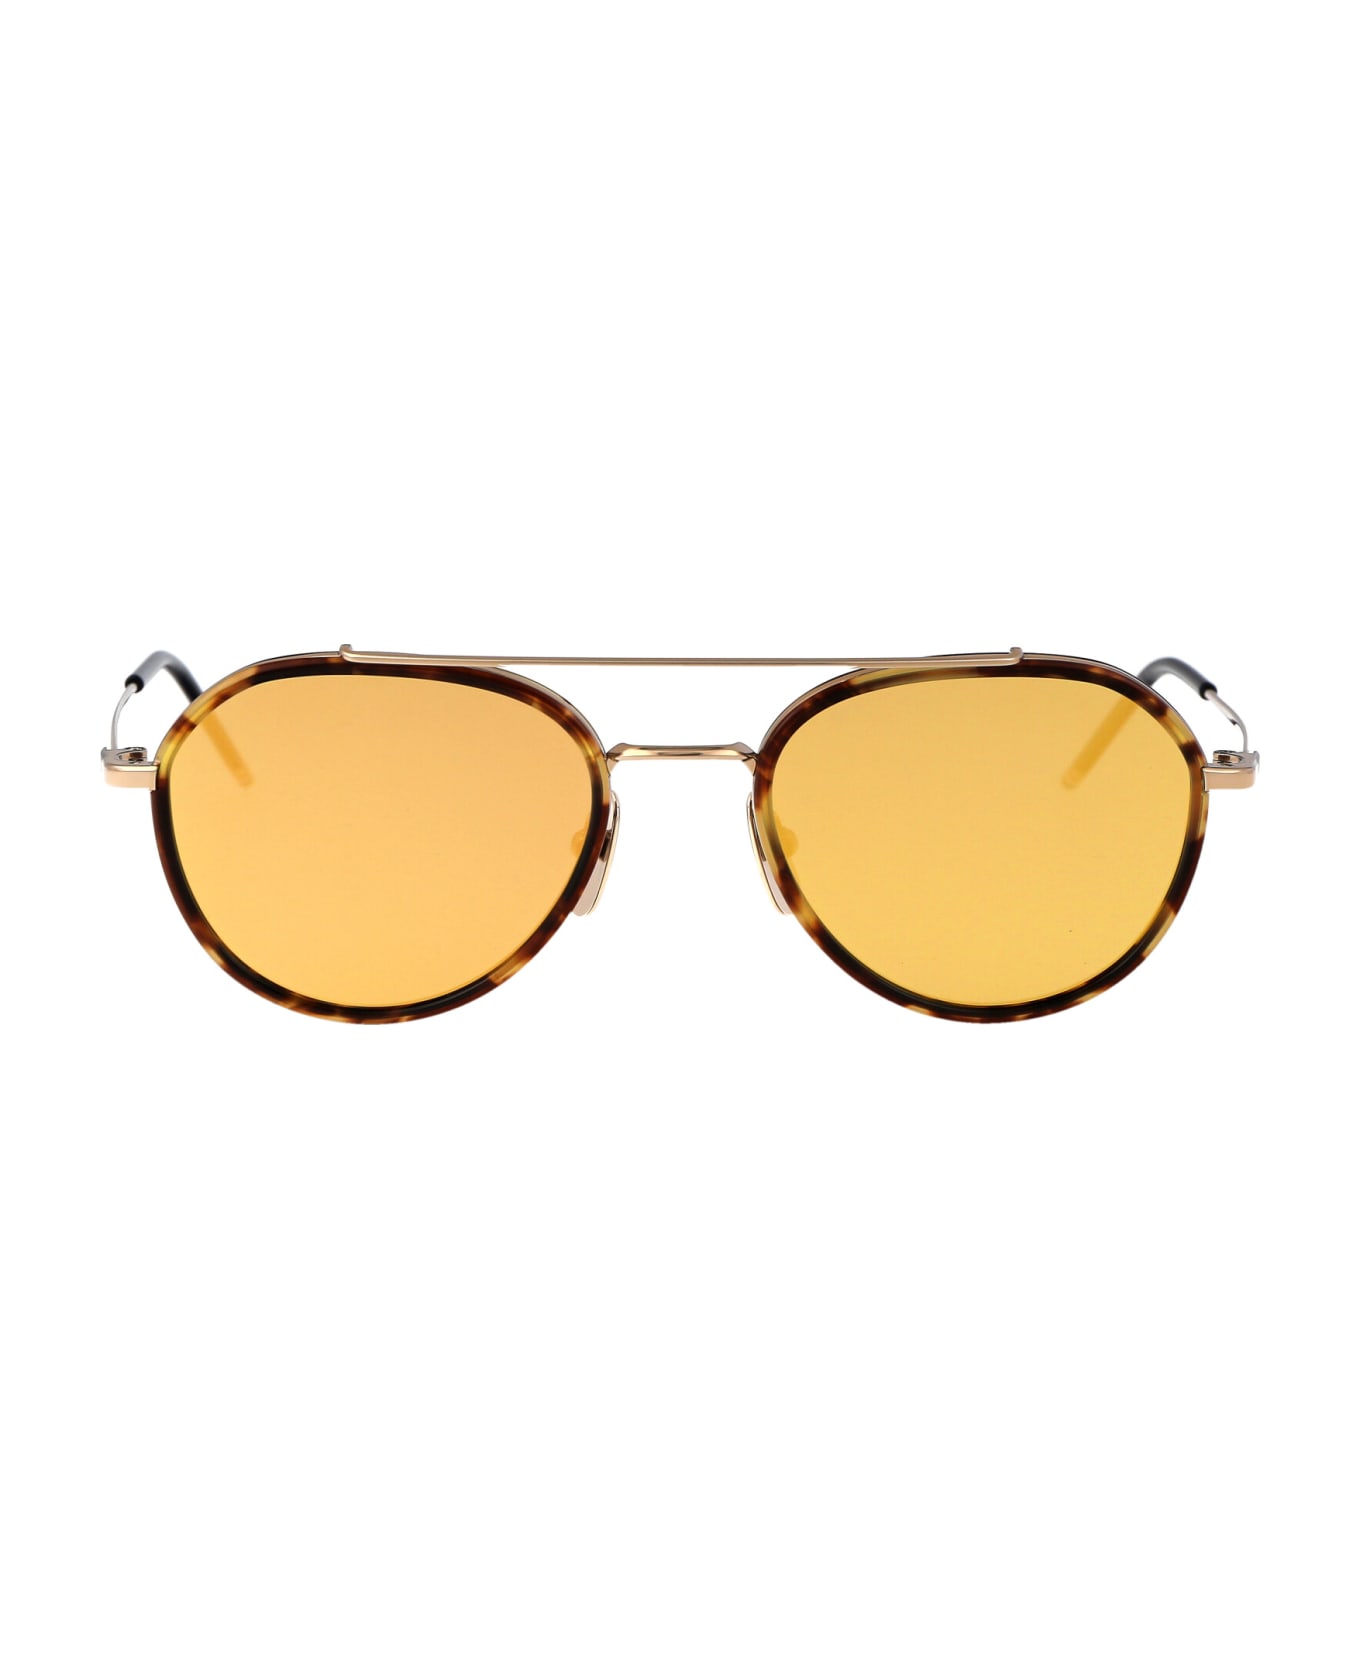 Thom Browne Ues801a-g0003-215-51 Sunglasses - 215 MED サングラス